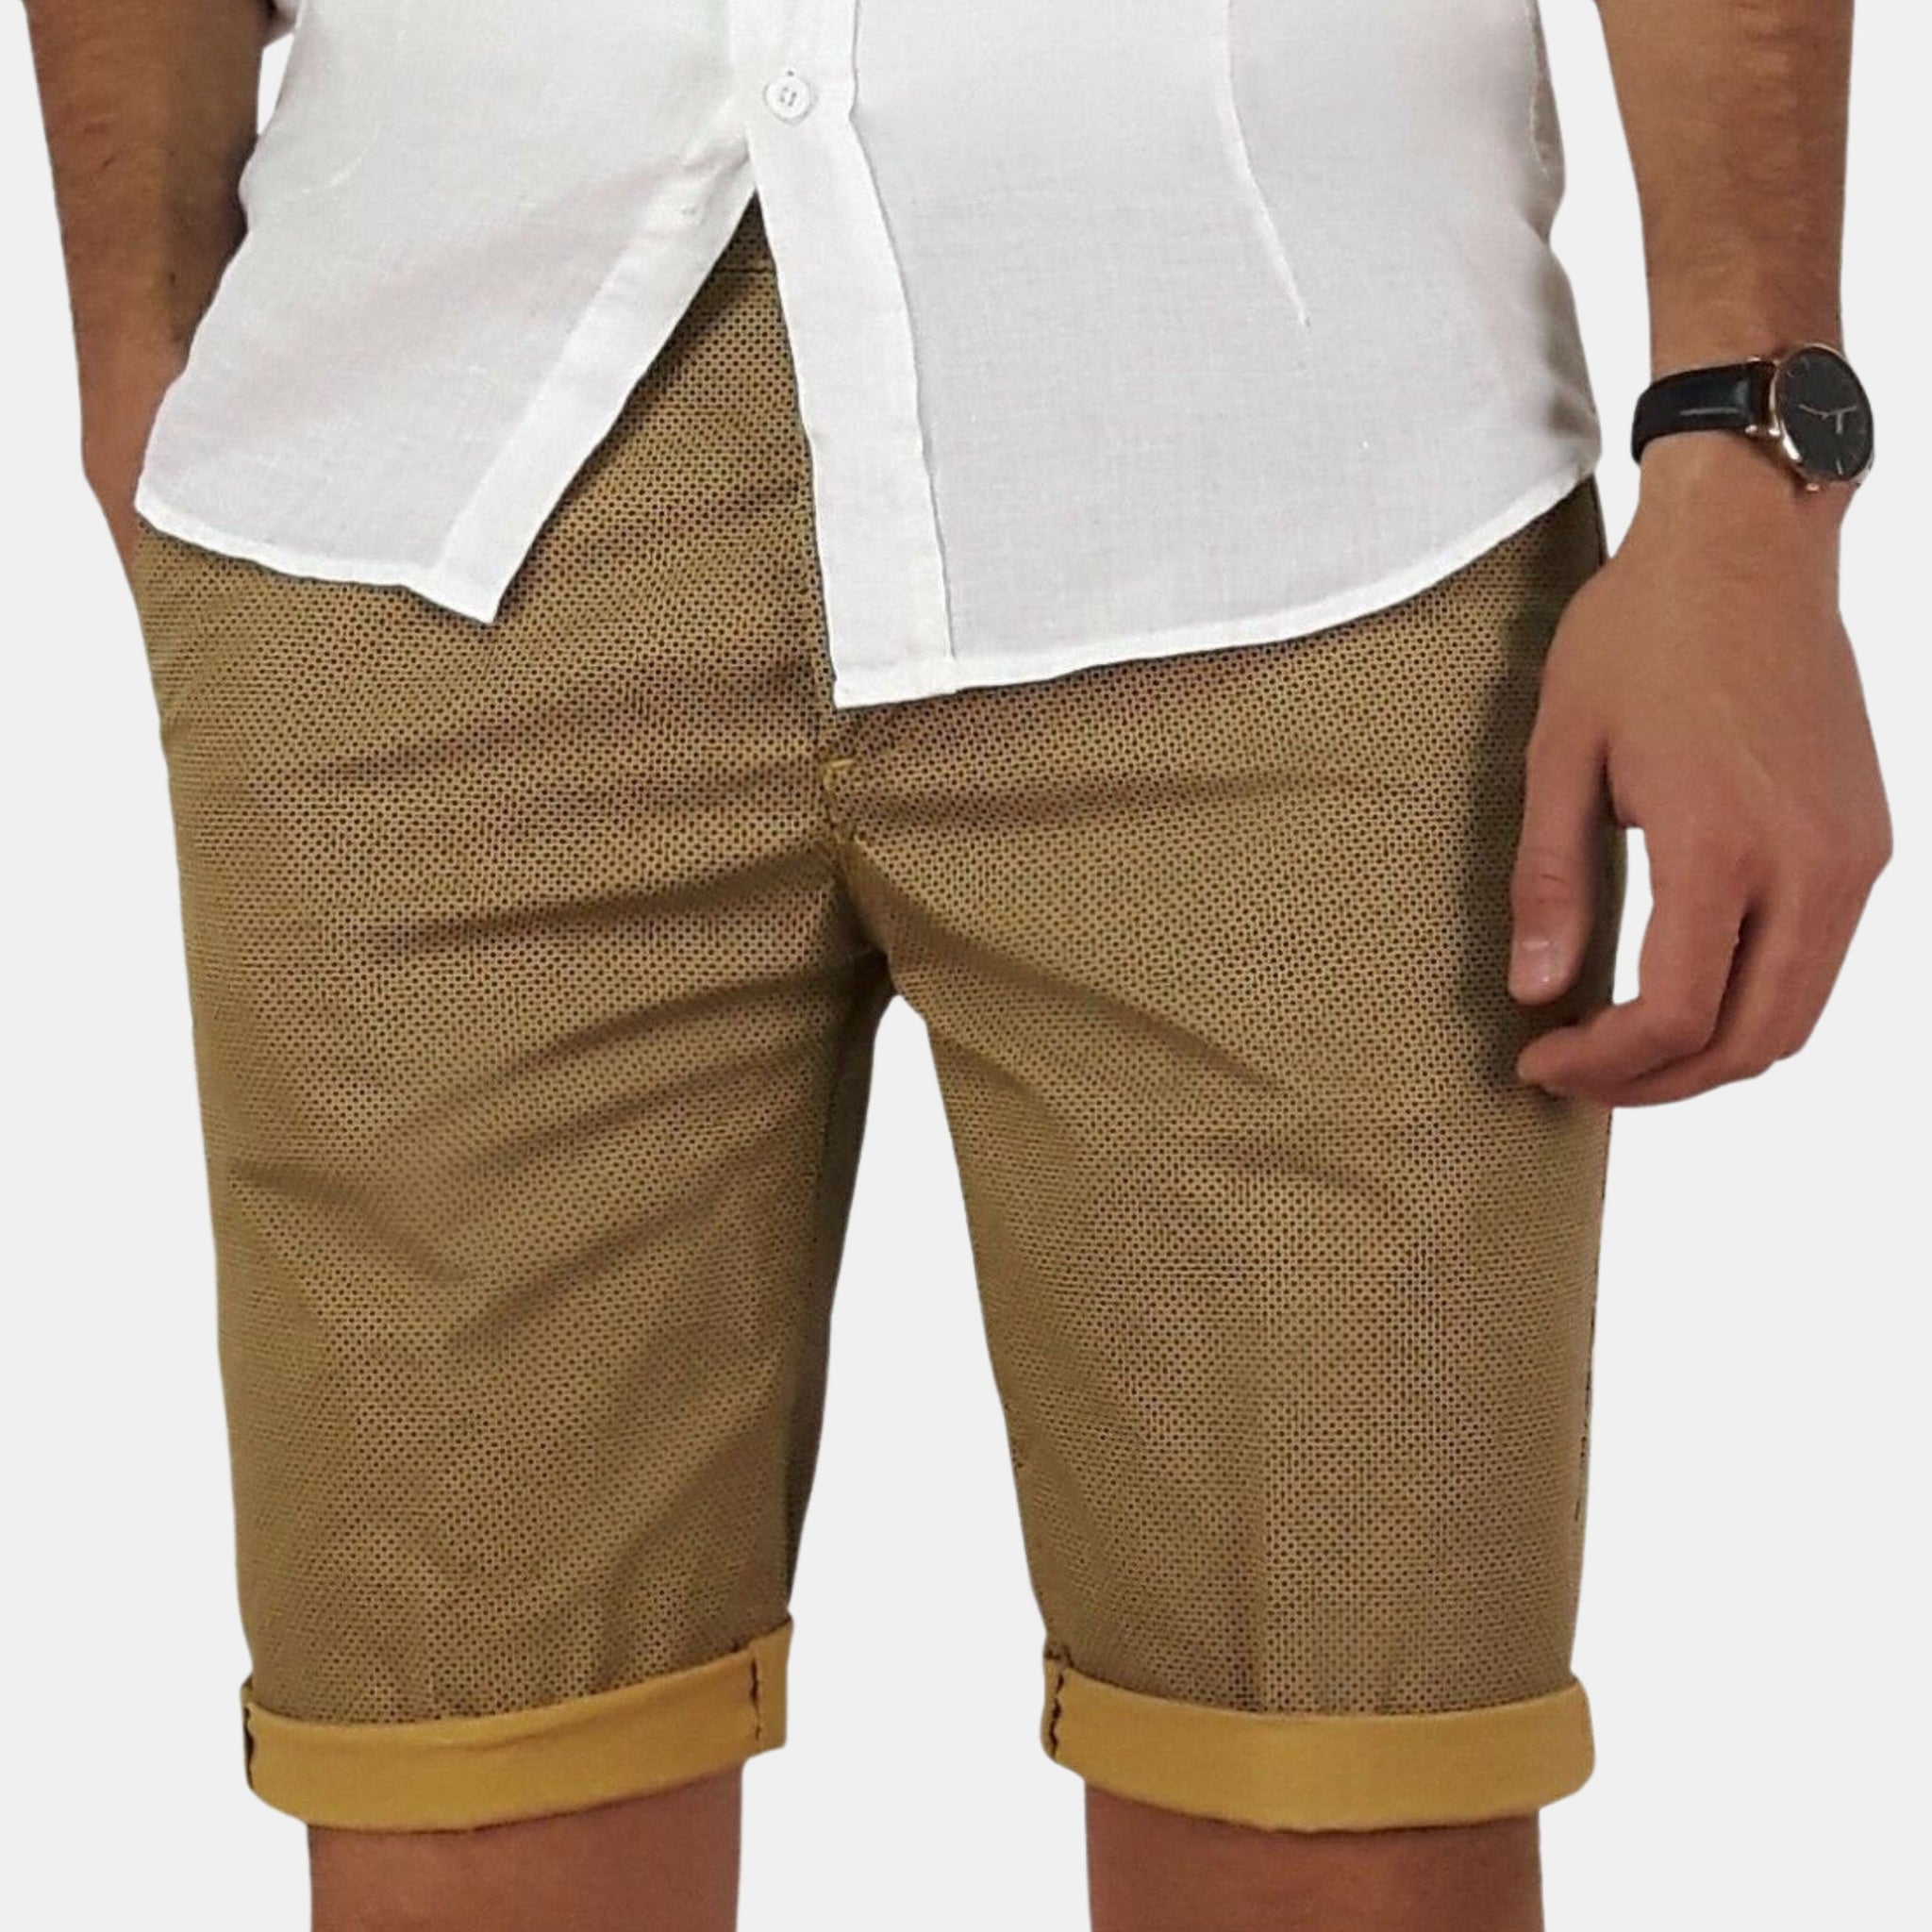 Micro-patterned Bermuda shorts